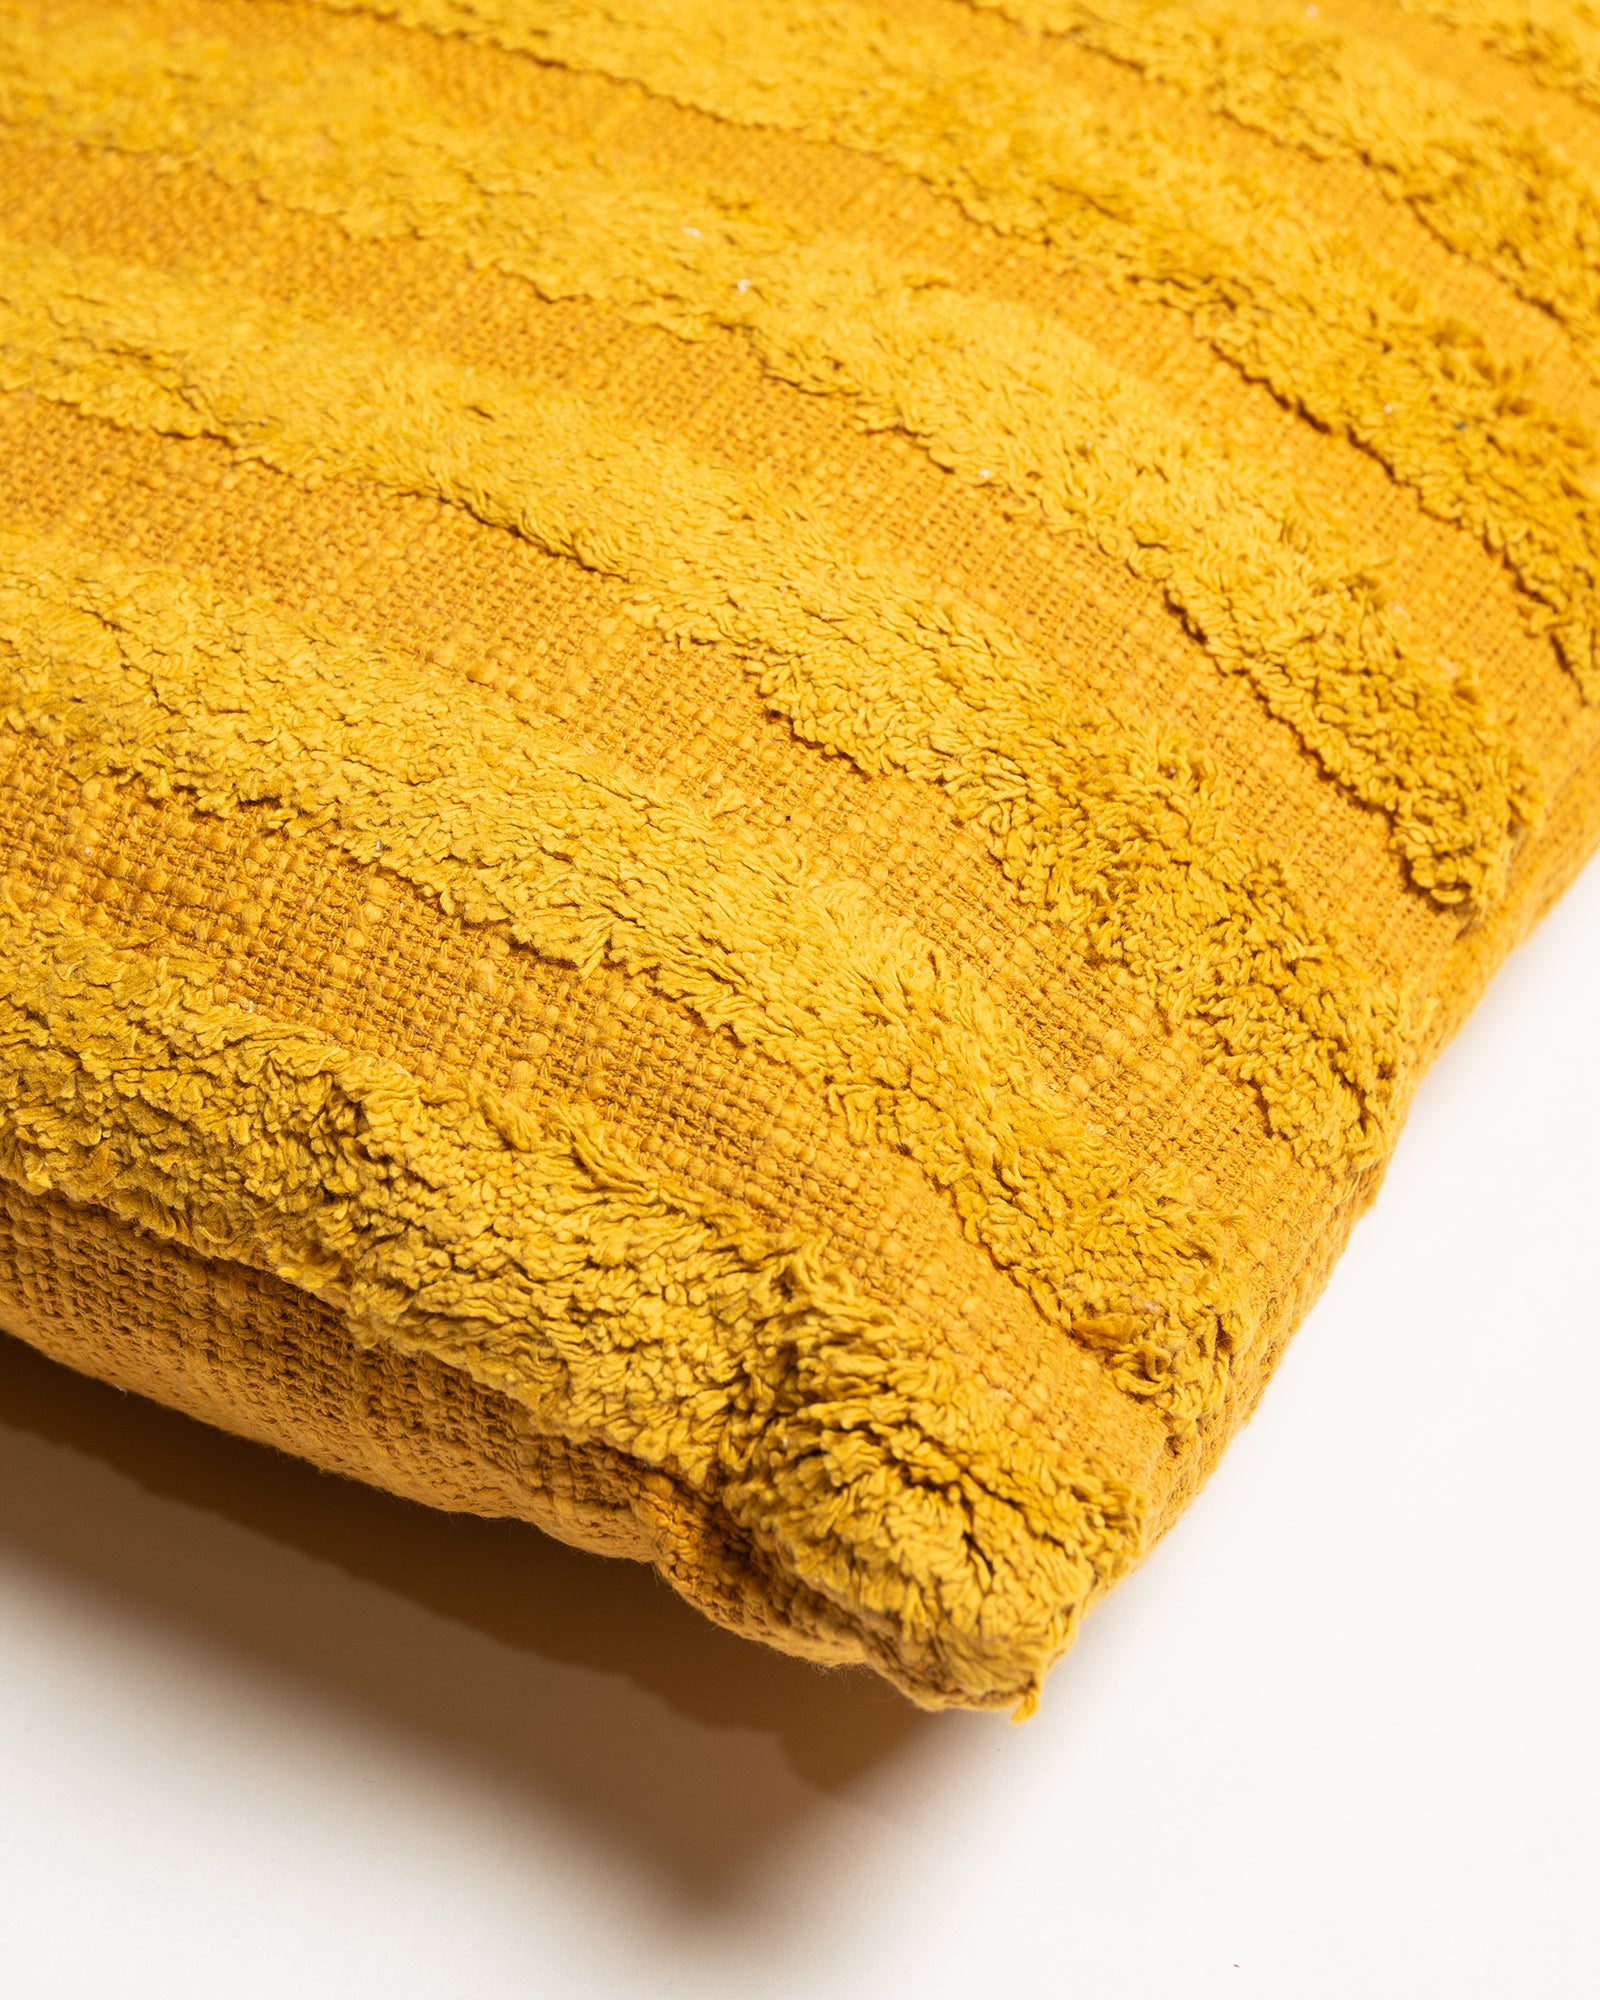 Tufted Stripe Cushion - Mustard